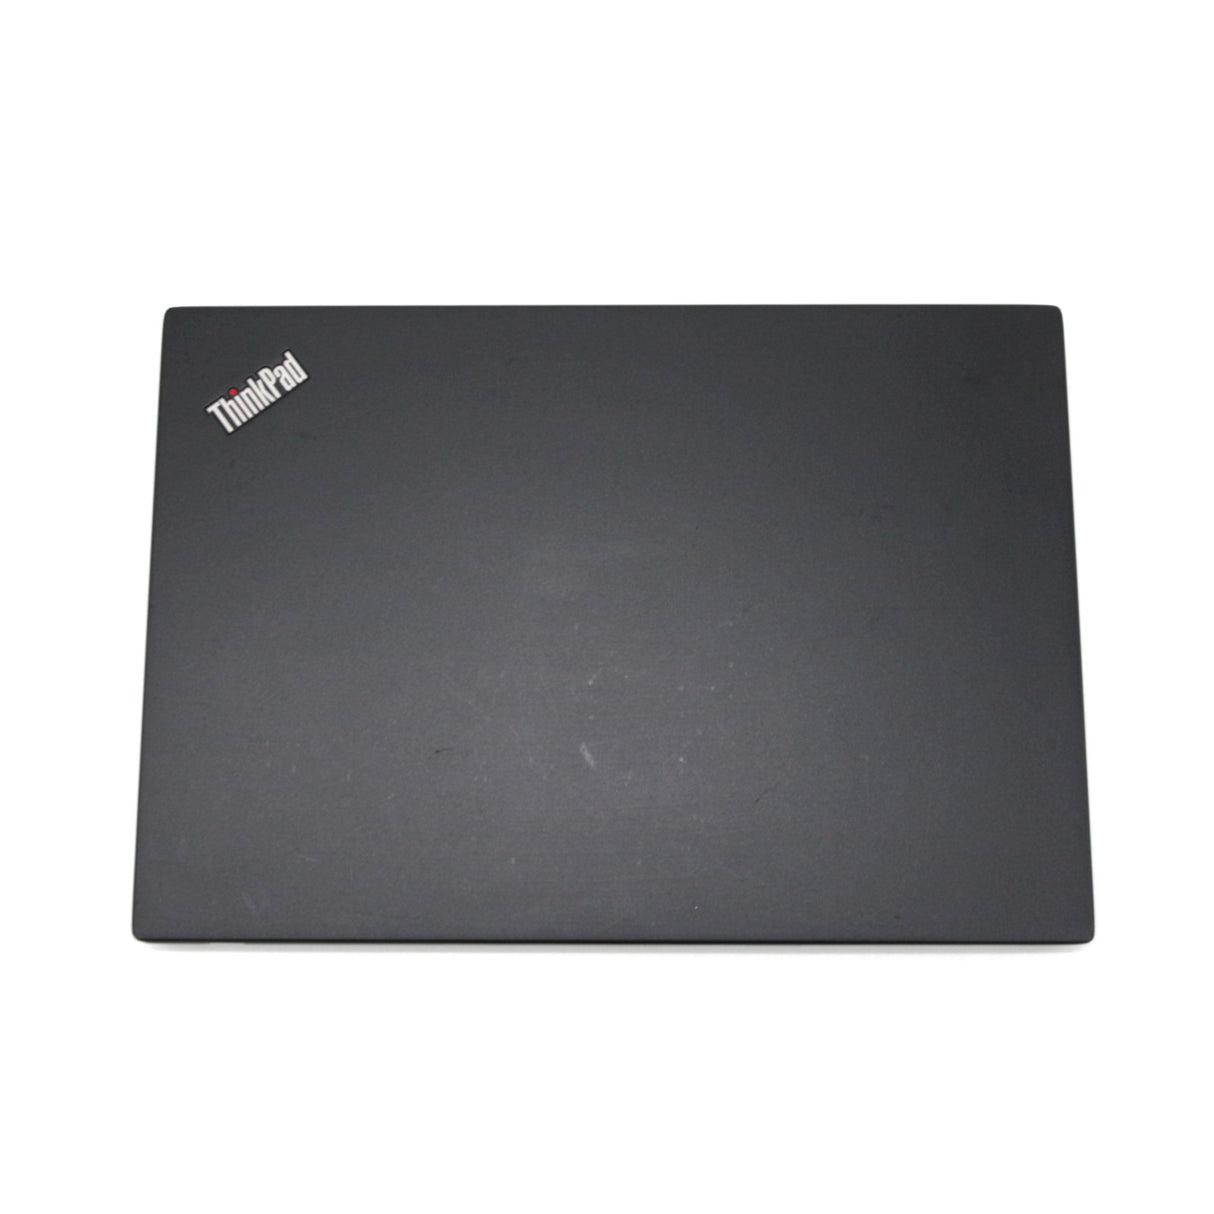 Lenovo ThinkPad X13 Gen 1 Laptop: 10th Gen i7, 16GB RAM, 512GB, 4G, Warranty VAT - GreenGreen Store